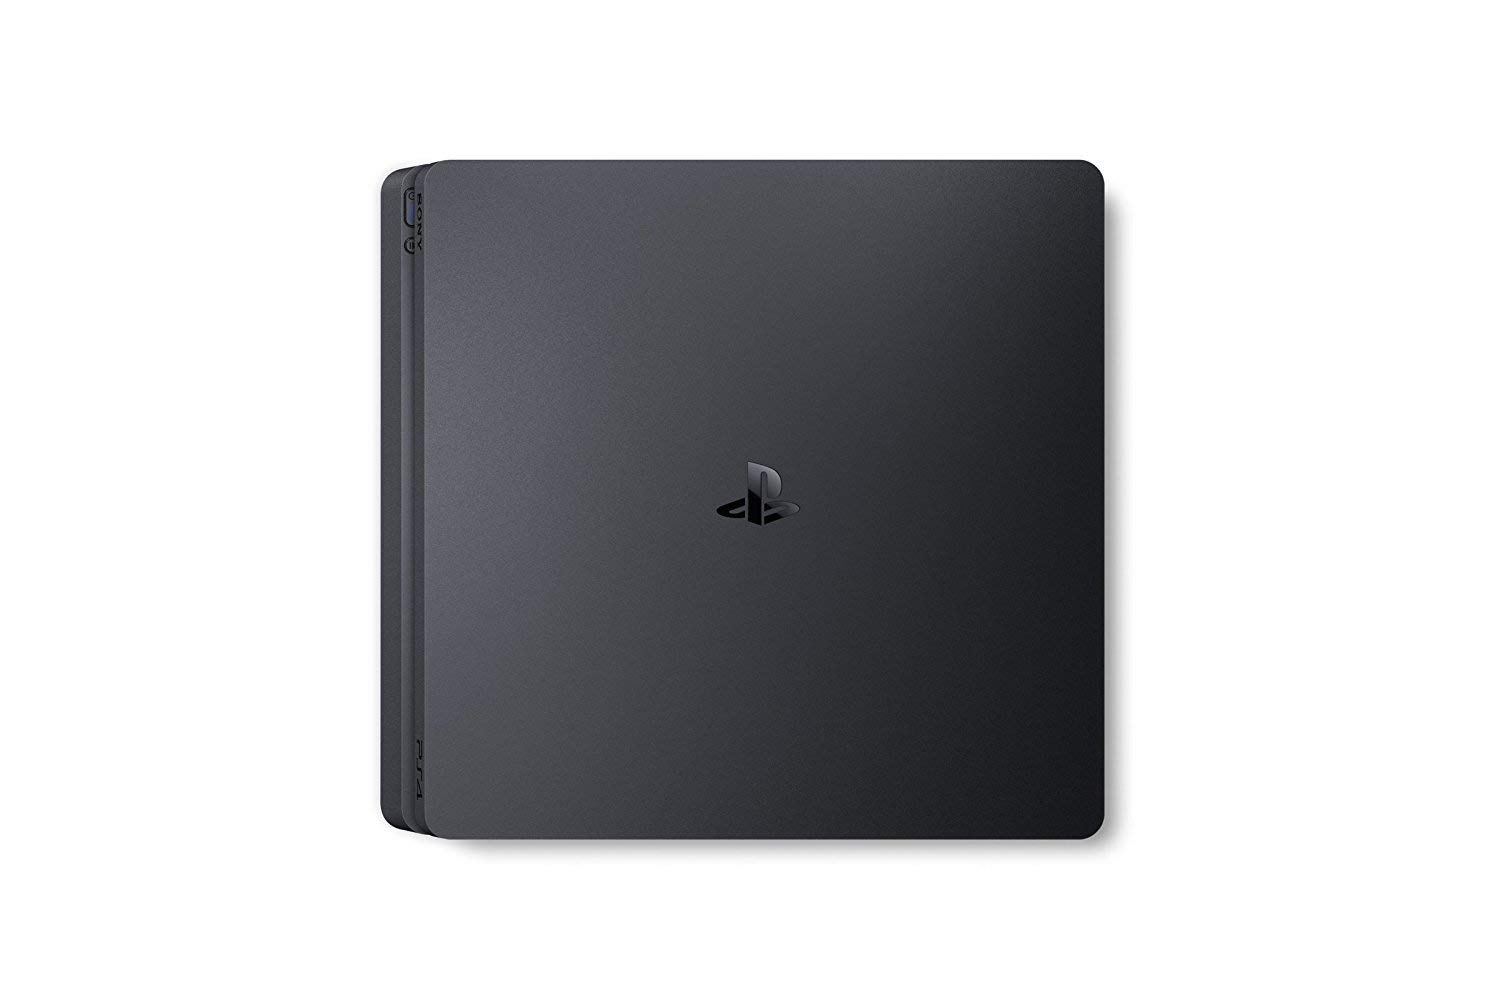 PlayStation 4 CUH-2200 Series 500GB HDD (Jet Black) - Bitcoin